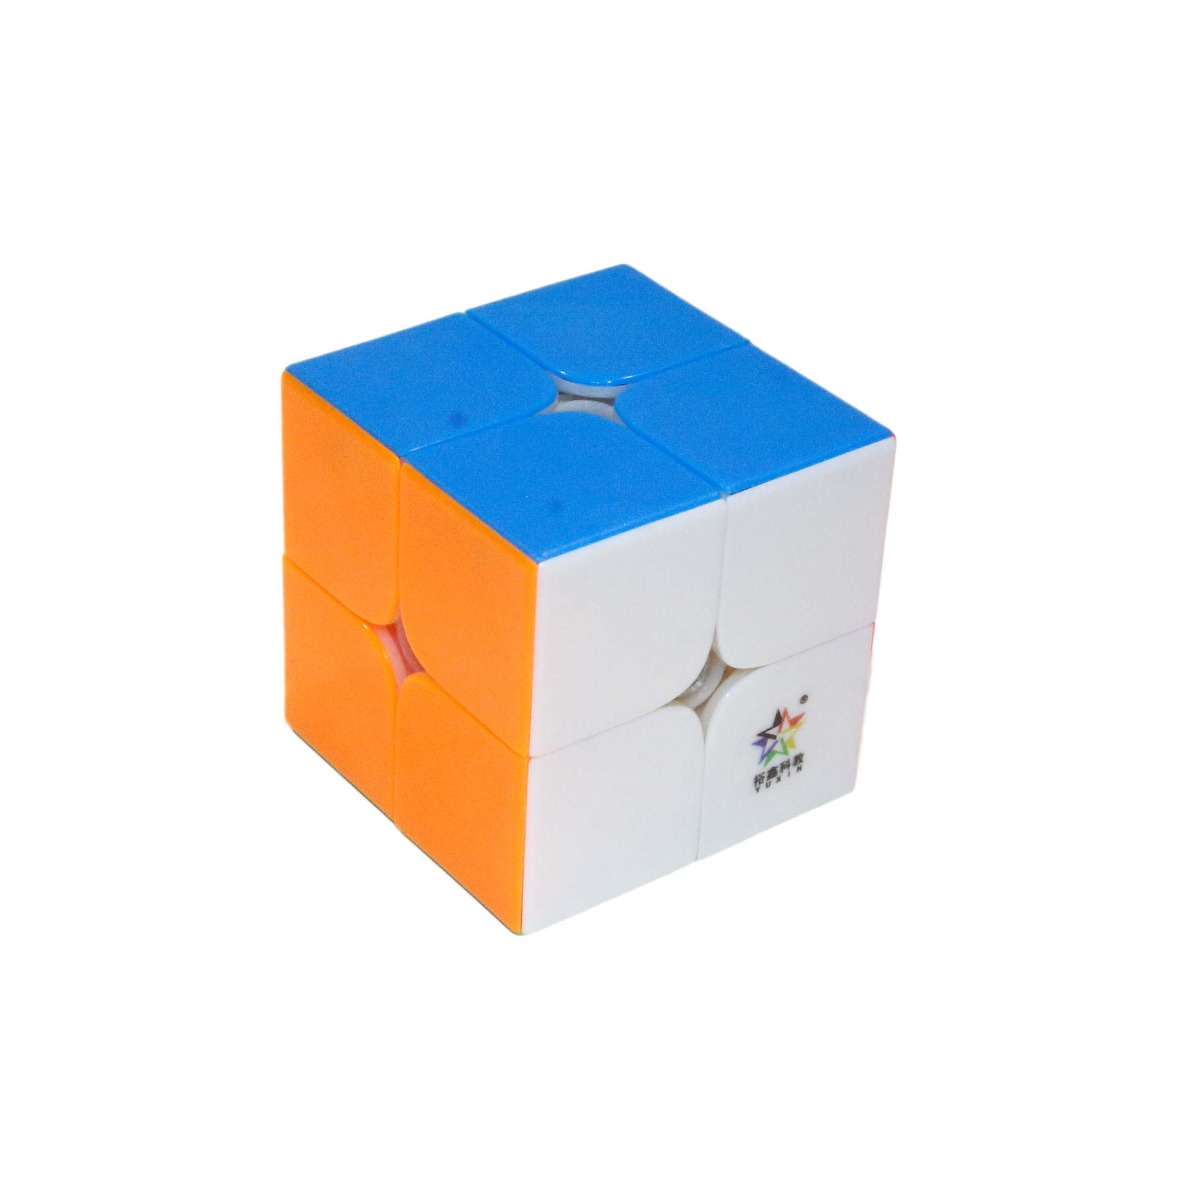 Yuxin Little Magic 2X2 V2M Magnetic Speed Cube Stickerless